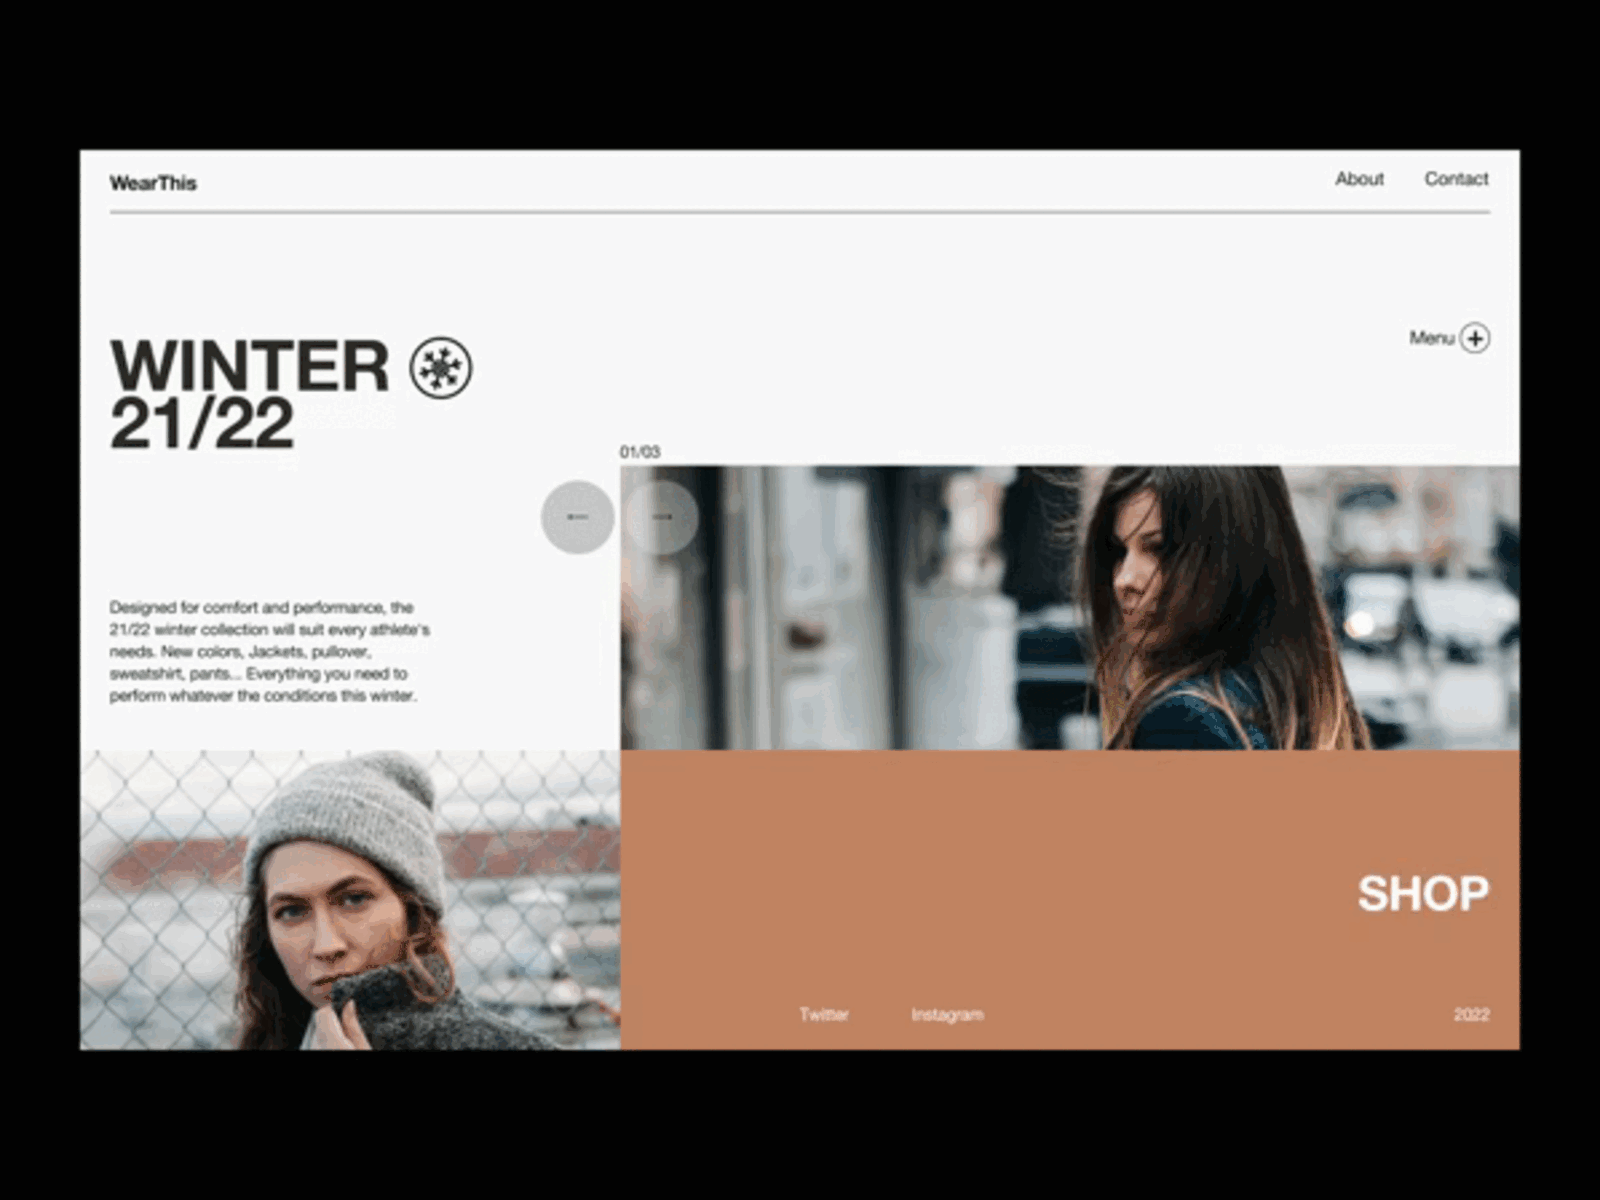 WearThis - Winter 22 -  Website exercise